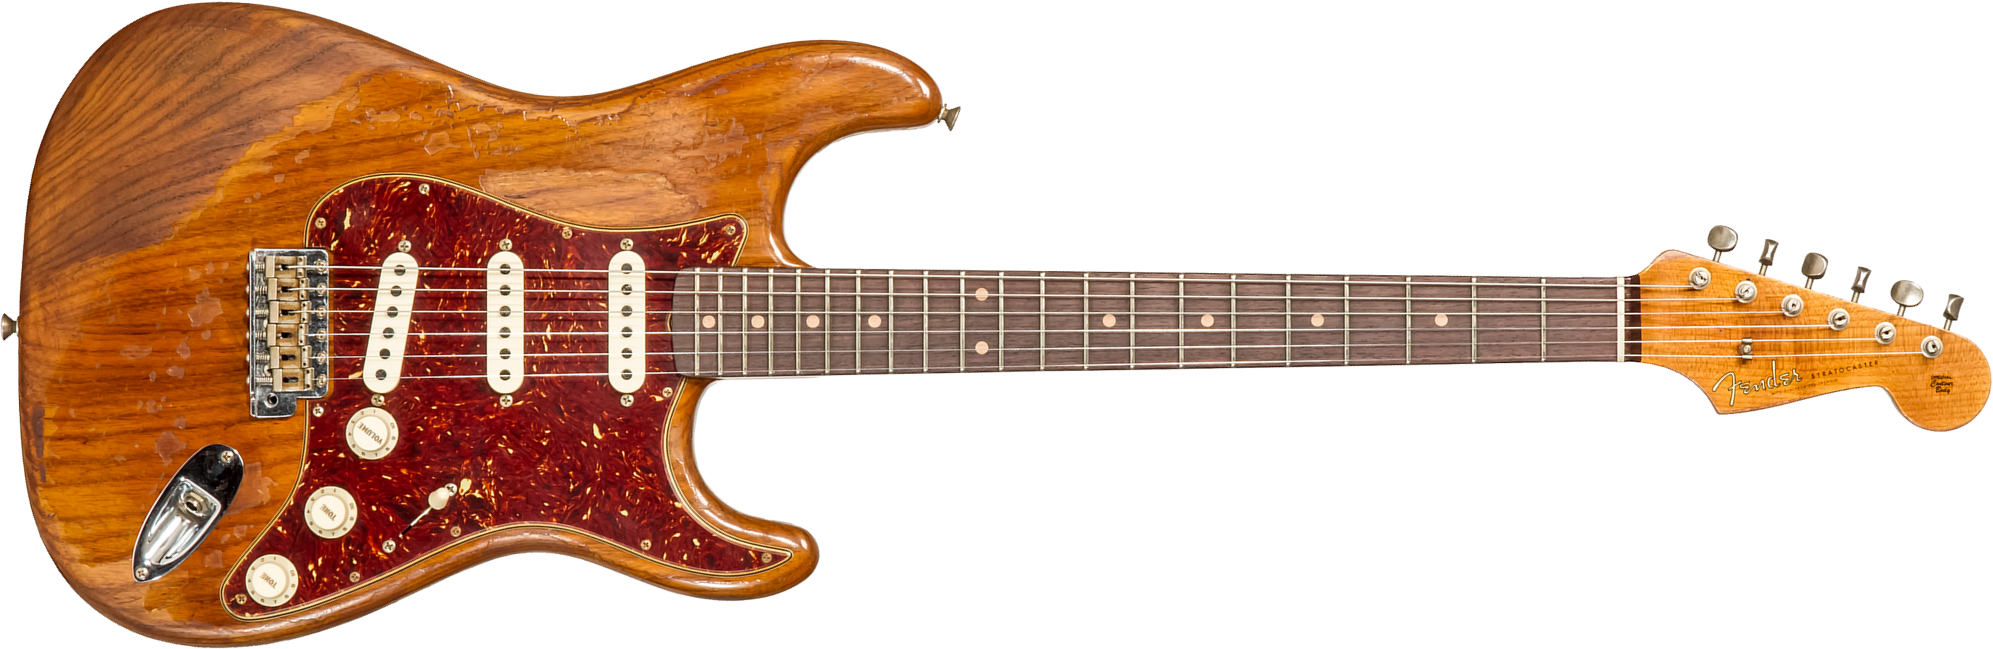 Fender Custom Shop Strat 1961 3s Trem Rw #cz570266 - Super Heavy Relic Natural - E-Gitarre in Str-Form - Main picture